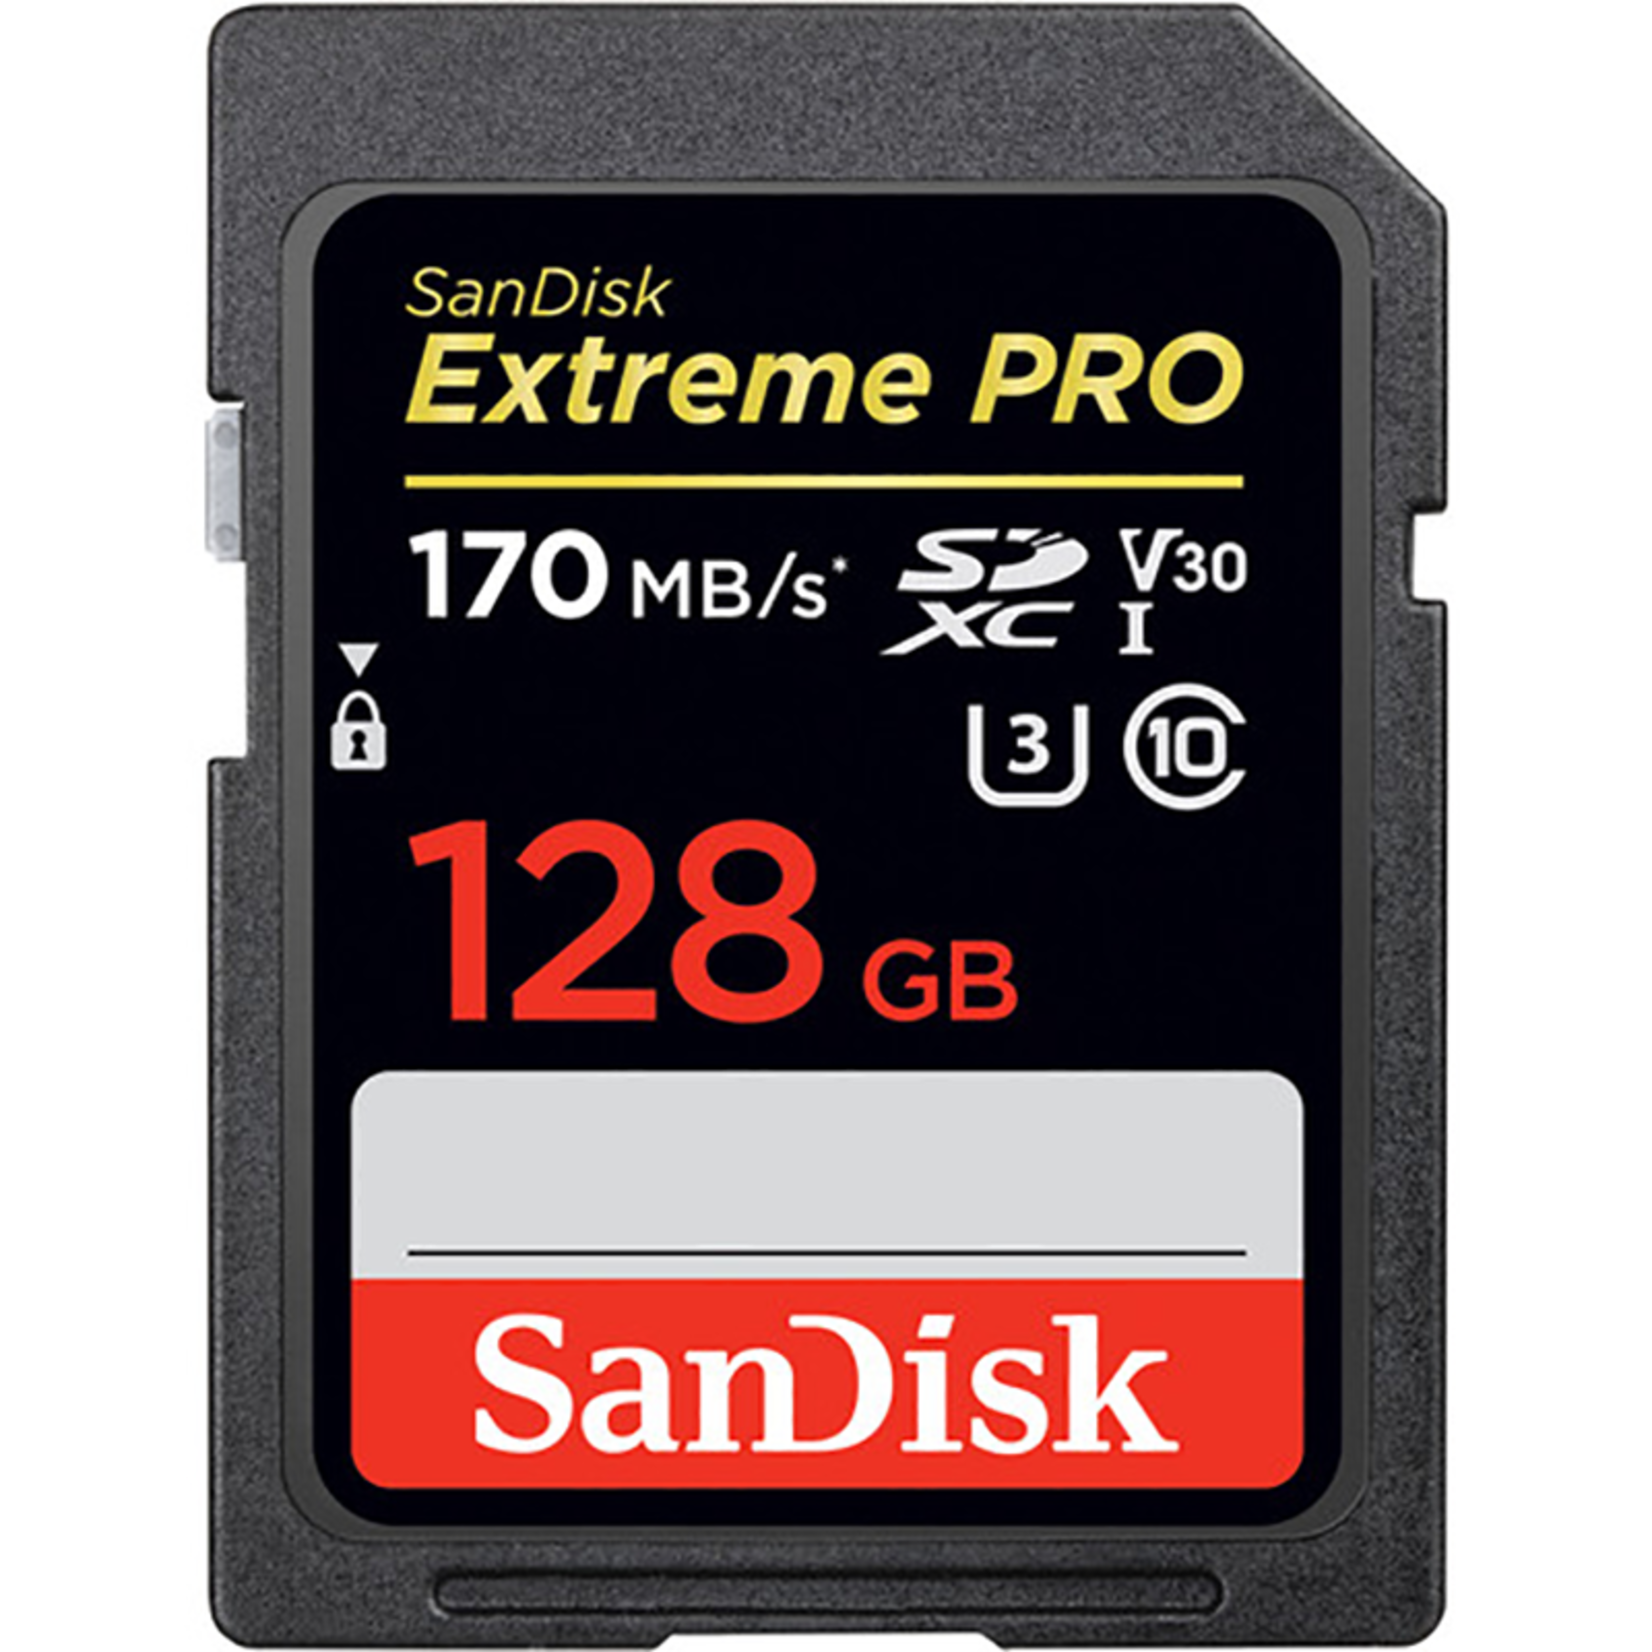 SanDisk Sandisk Extreme Pro SDXC Card UHS-I, up to 170mb/s Read Speeds